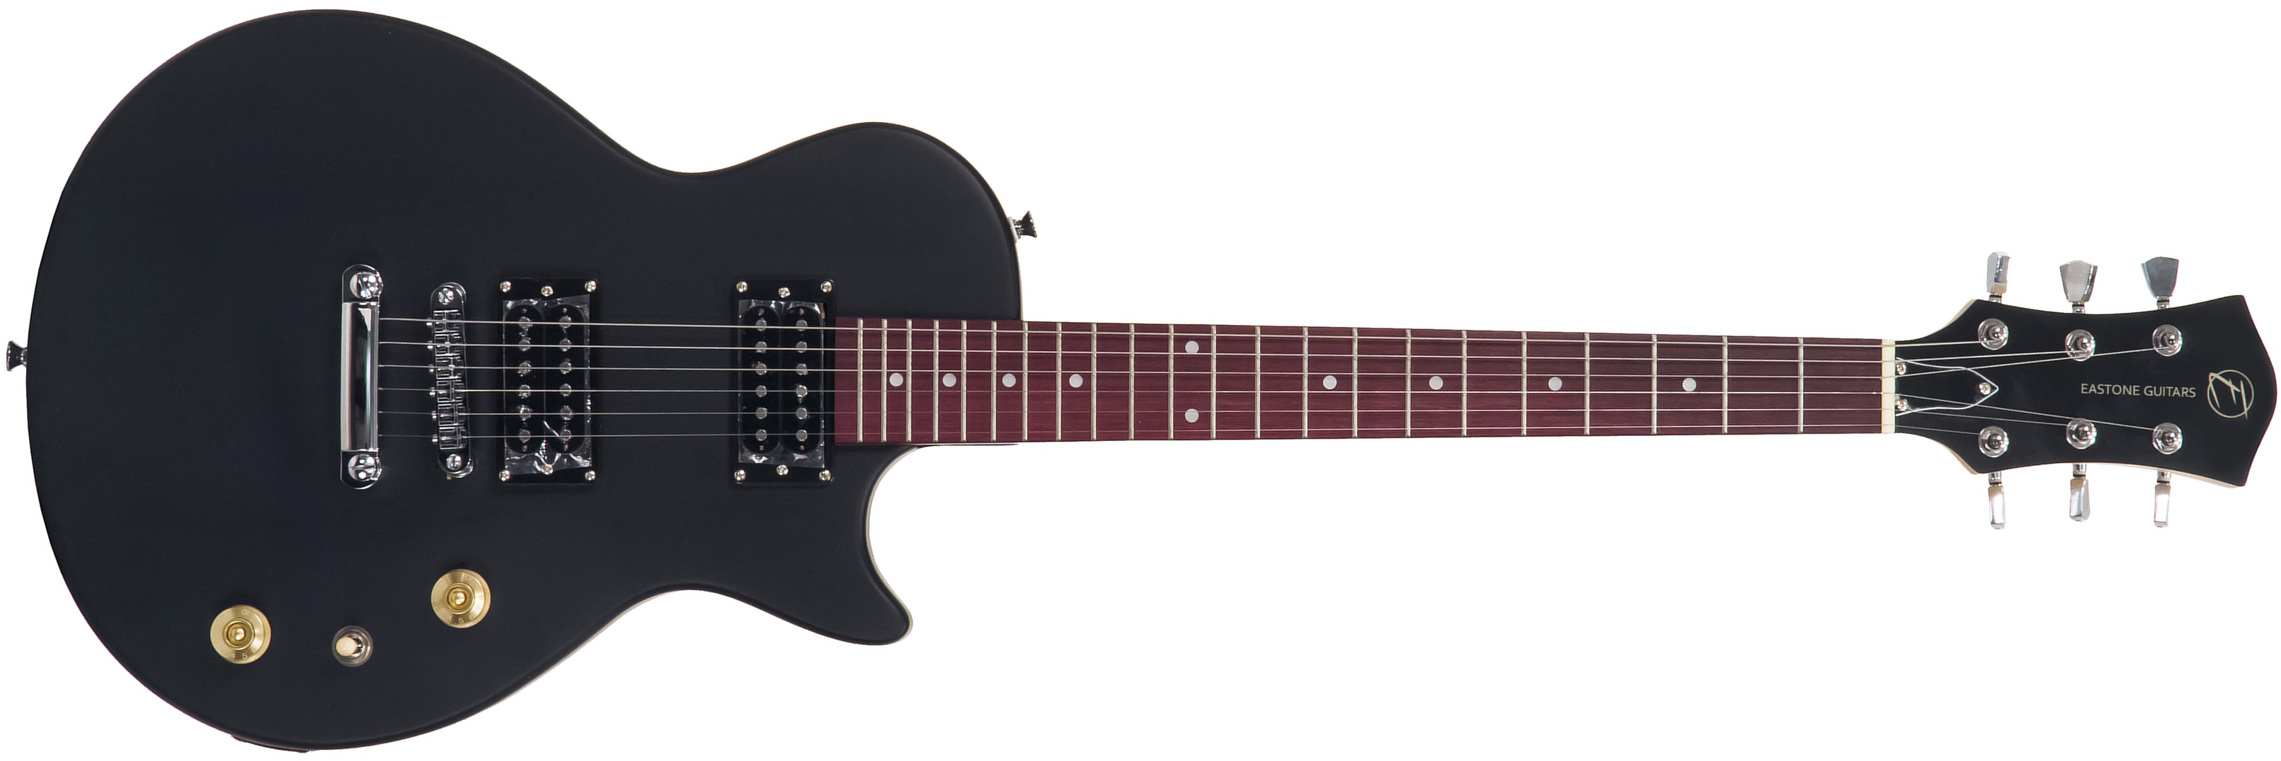 Eastone Lpl70 Hh Ht Pur - Black Satin - Single cut electric guitar - Main picture